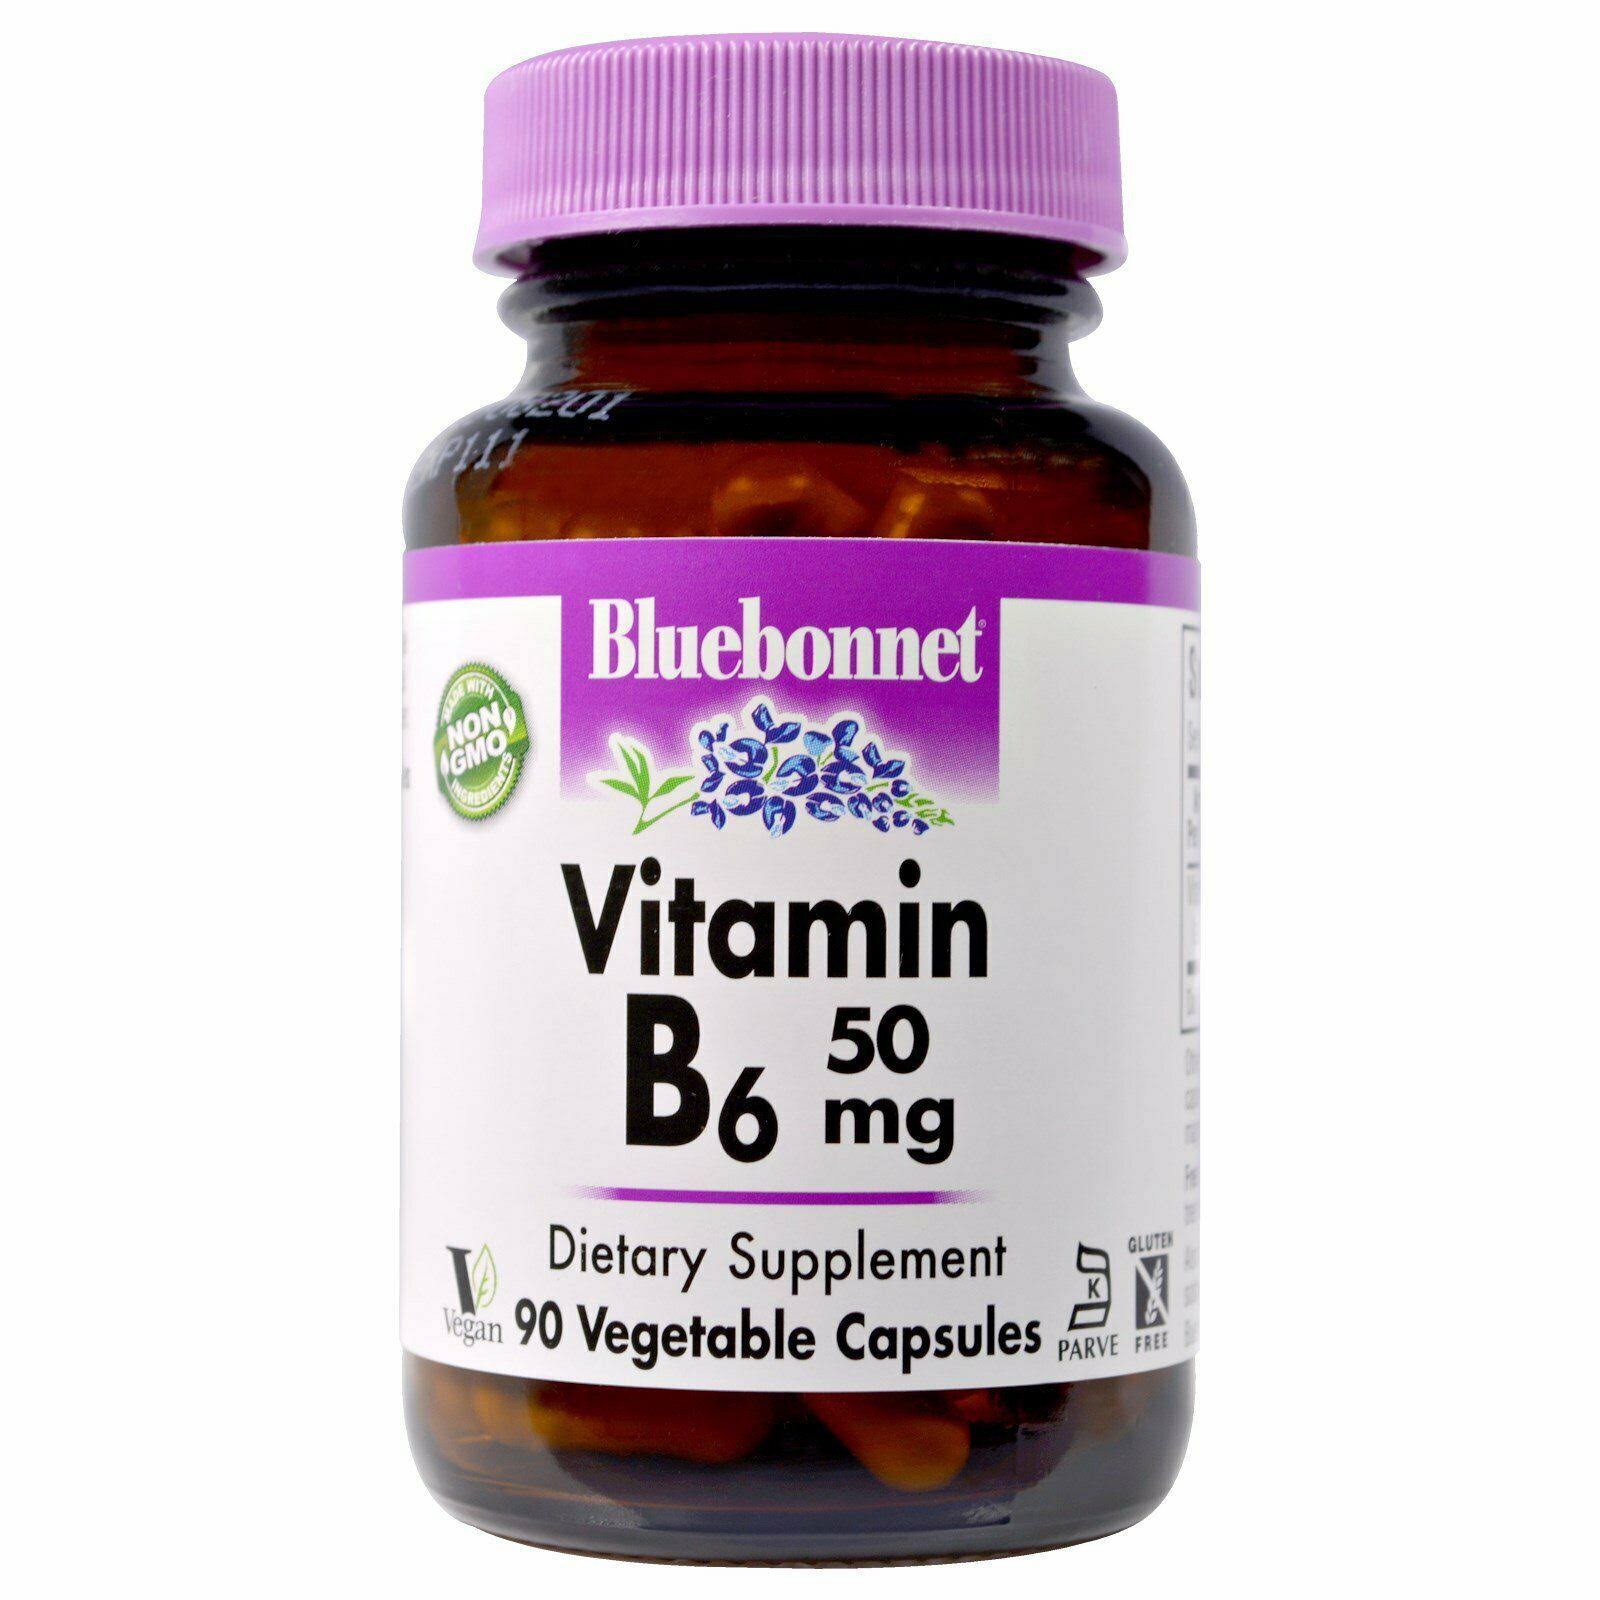 Bluebonnet Nutrition Vitamin B-6 Dietary Supplement - 90 Capsules